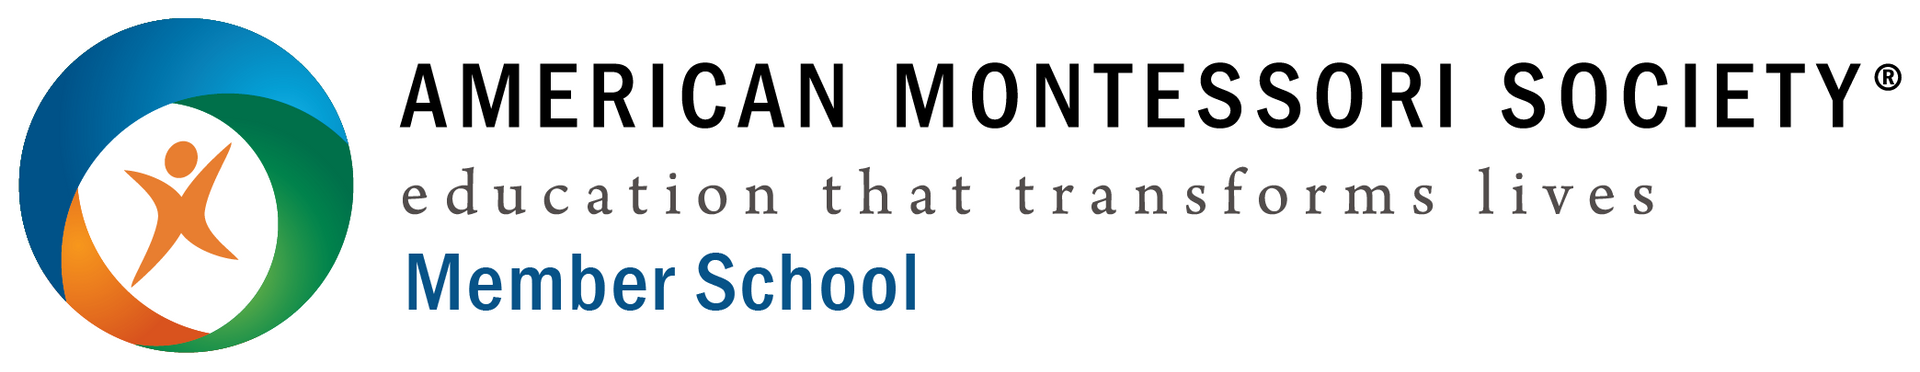 American Montessori Society Member School 